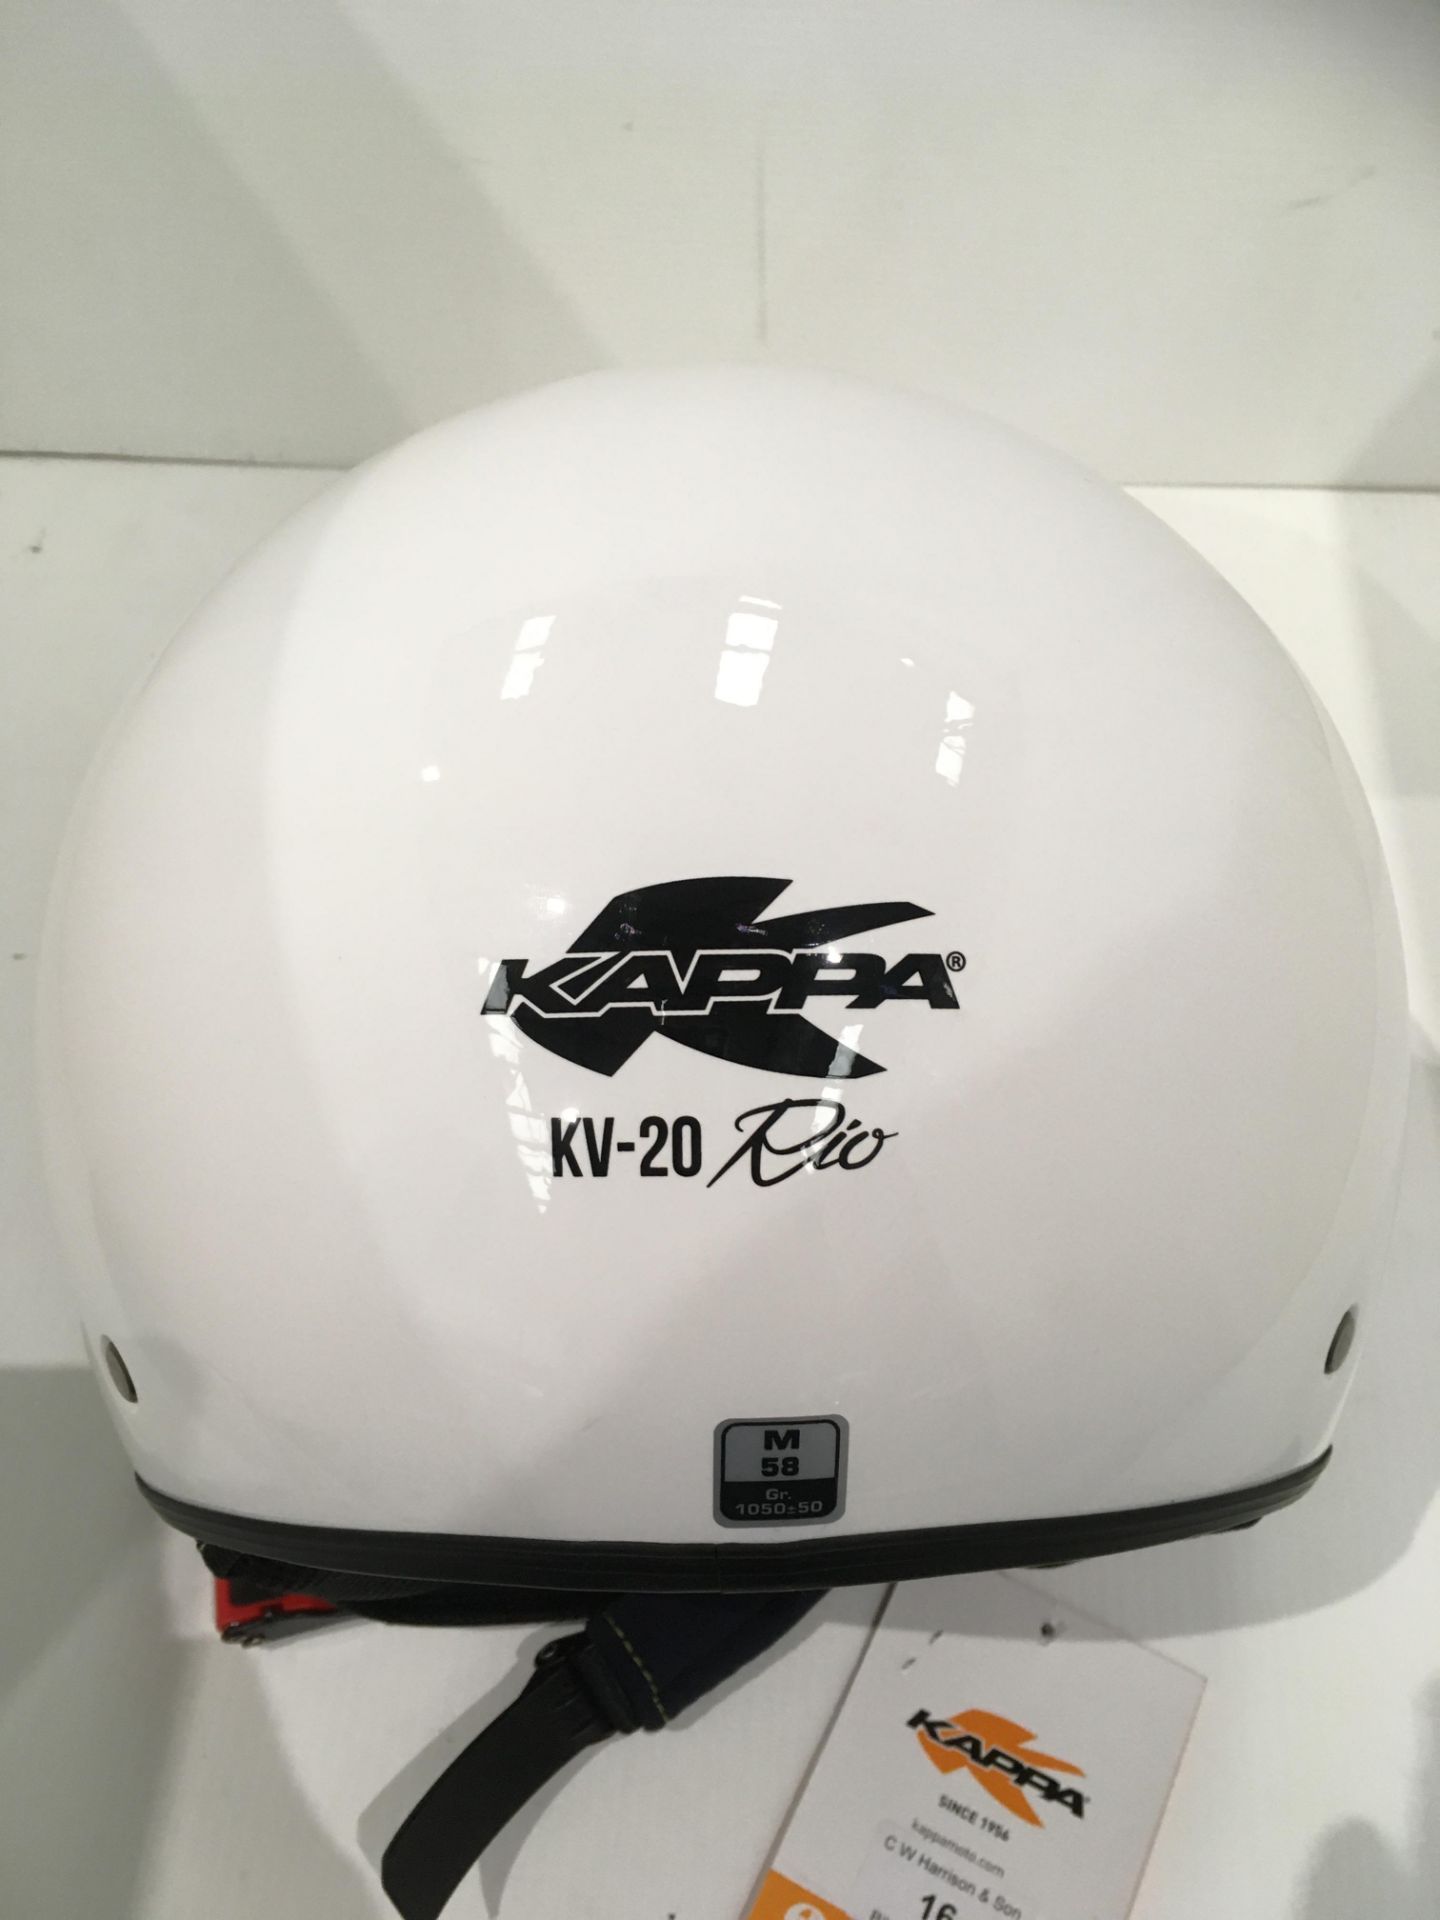 Kappa KV-20 Rio motorbike helmet in gloss white - size M (58cm) - Image 3 of 3